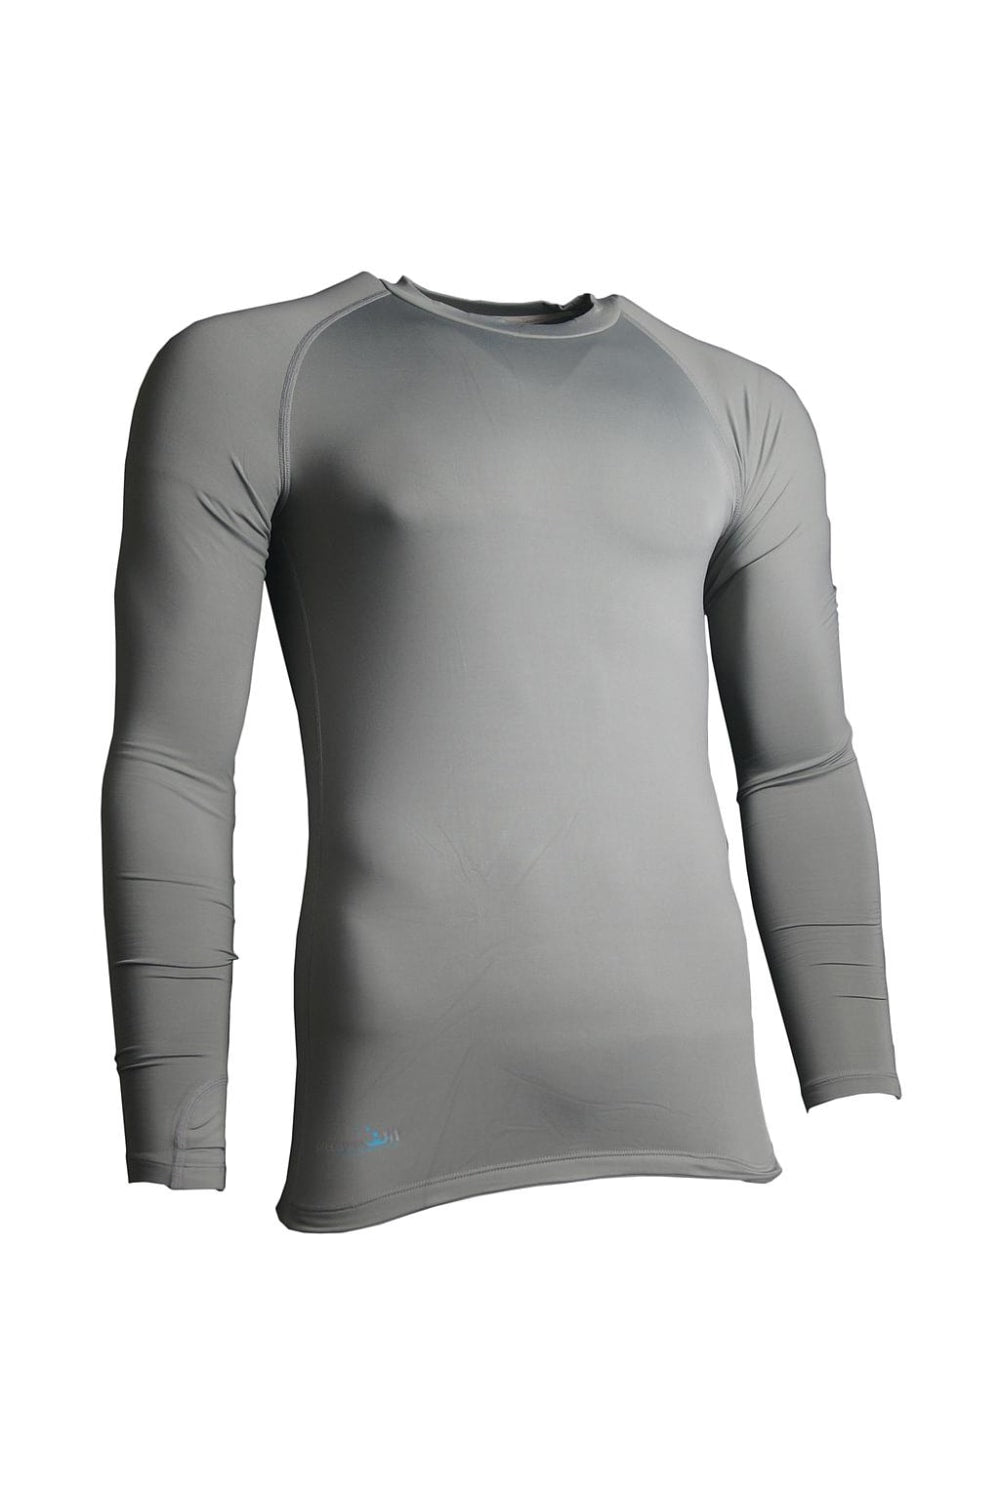 Childrens/Kids Essential Baselayer Long Sleeved Sports Shirt - Gray